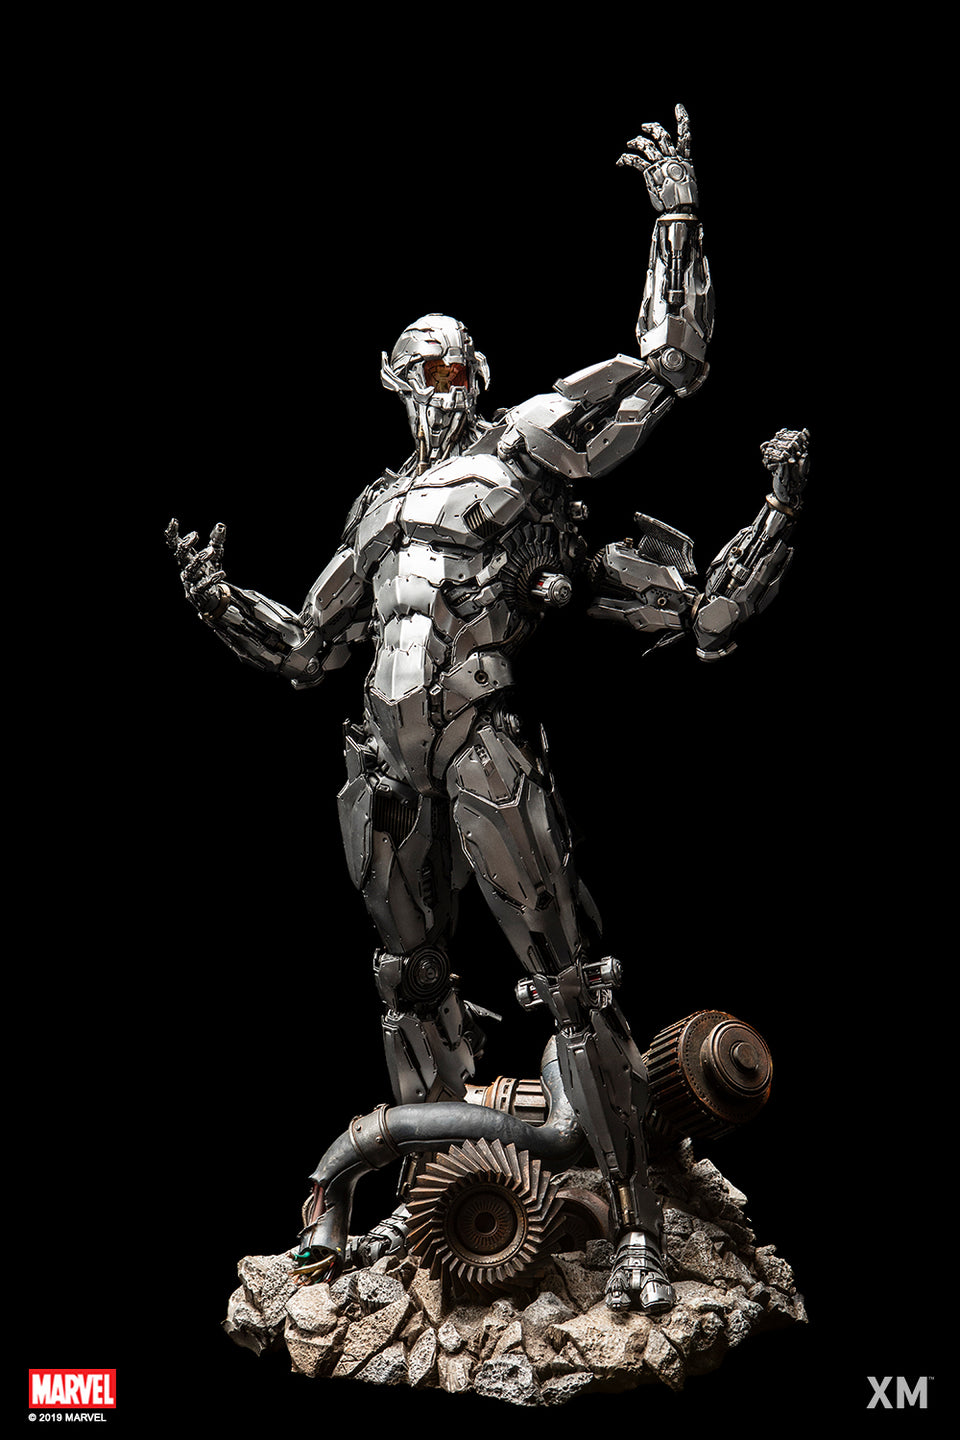 XM Studios Ultron 1:4 Scale Statue